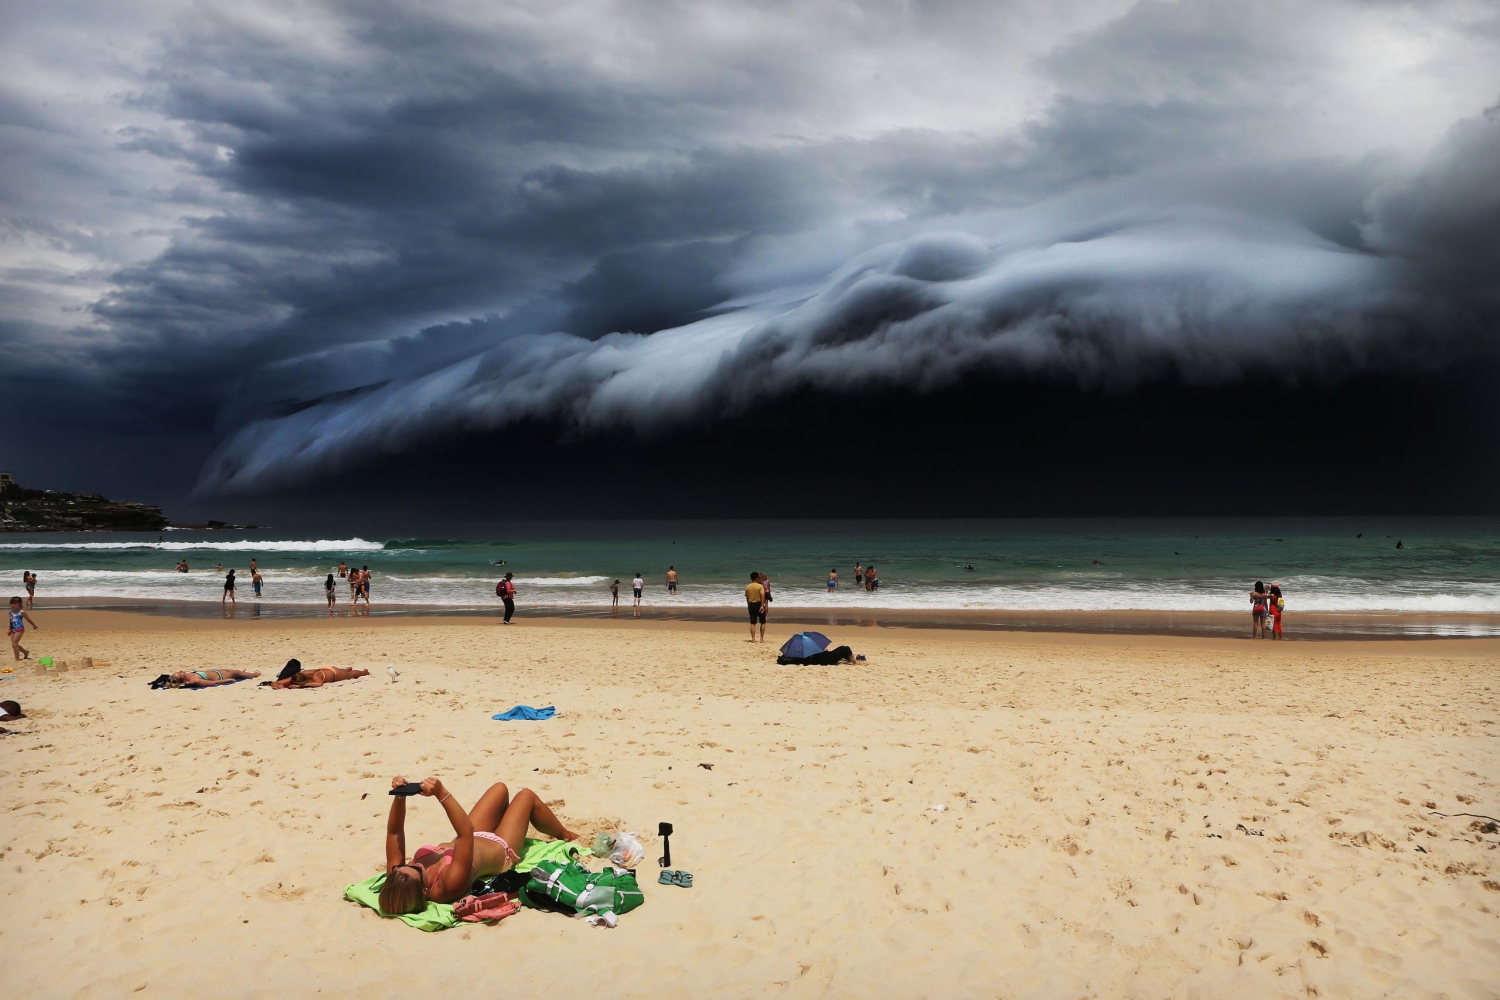 Una tormenta sobre una playa australiana, primer premio 'Naturaleza' del World Press Photo